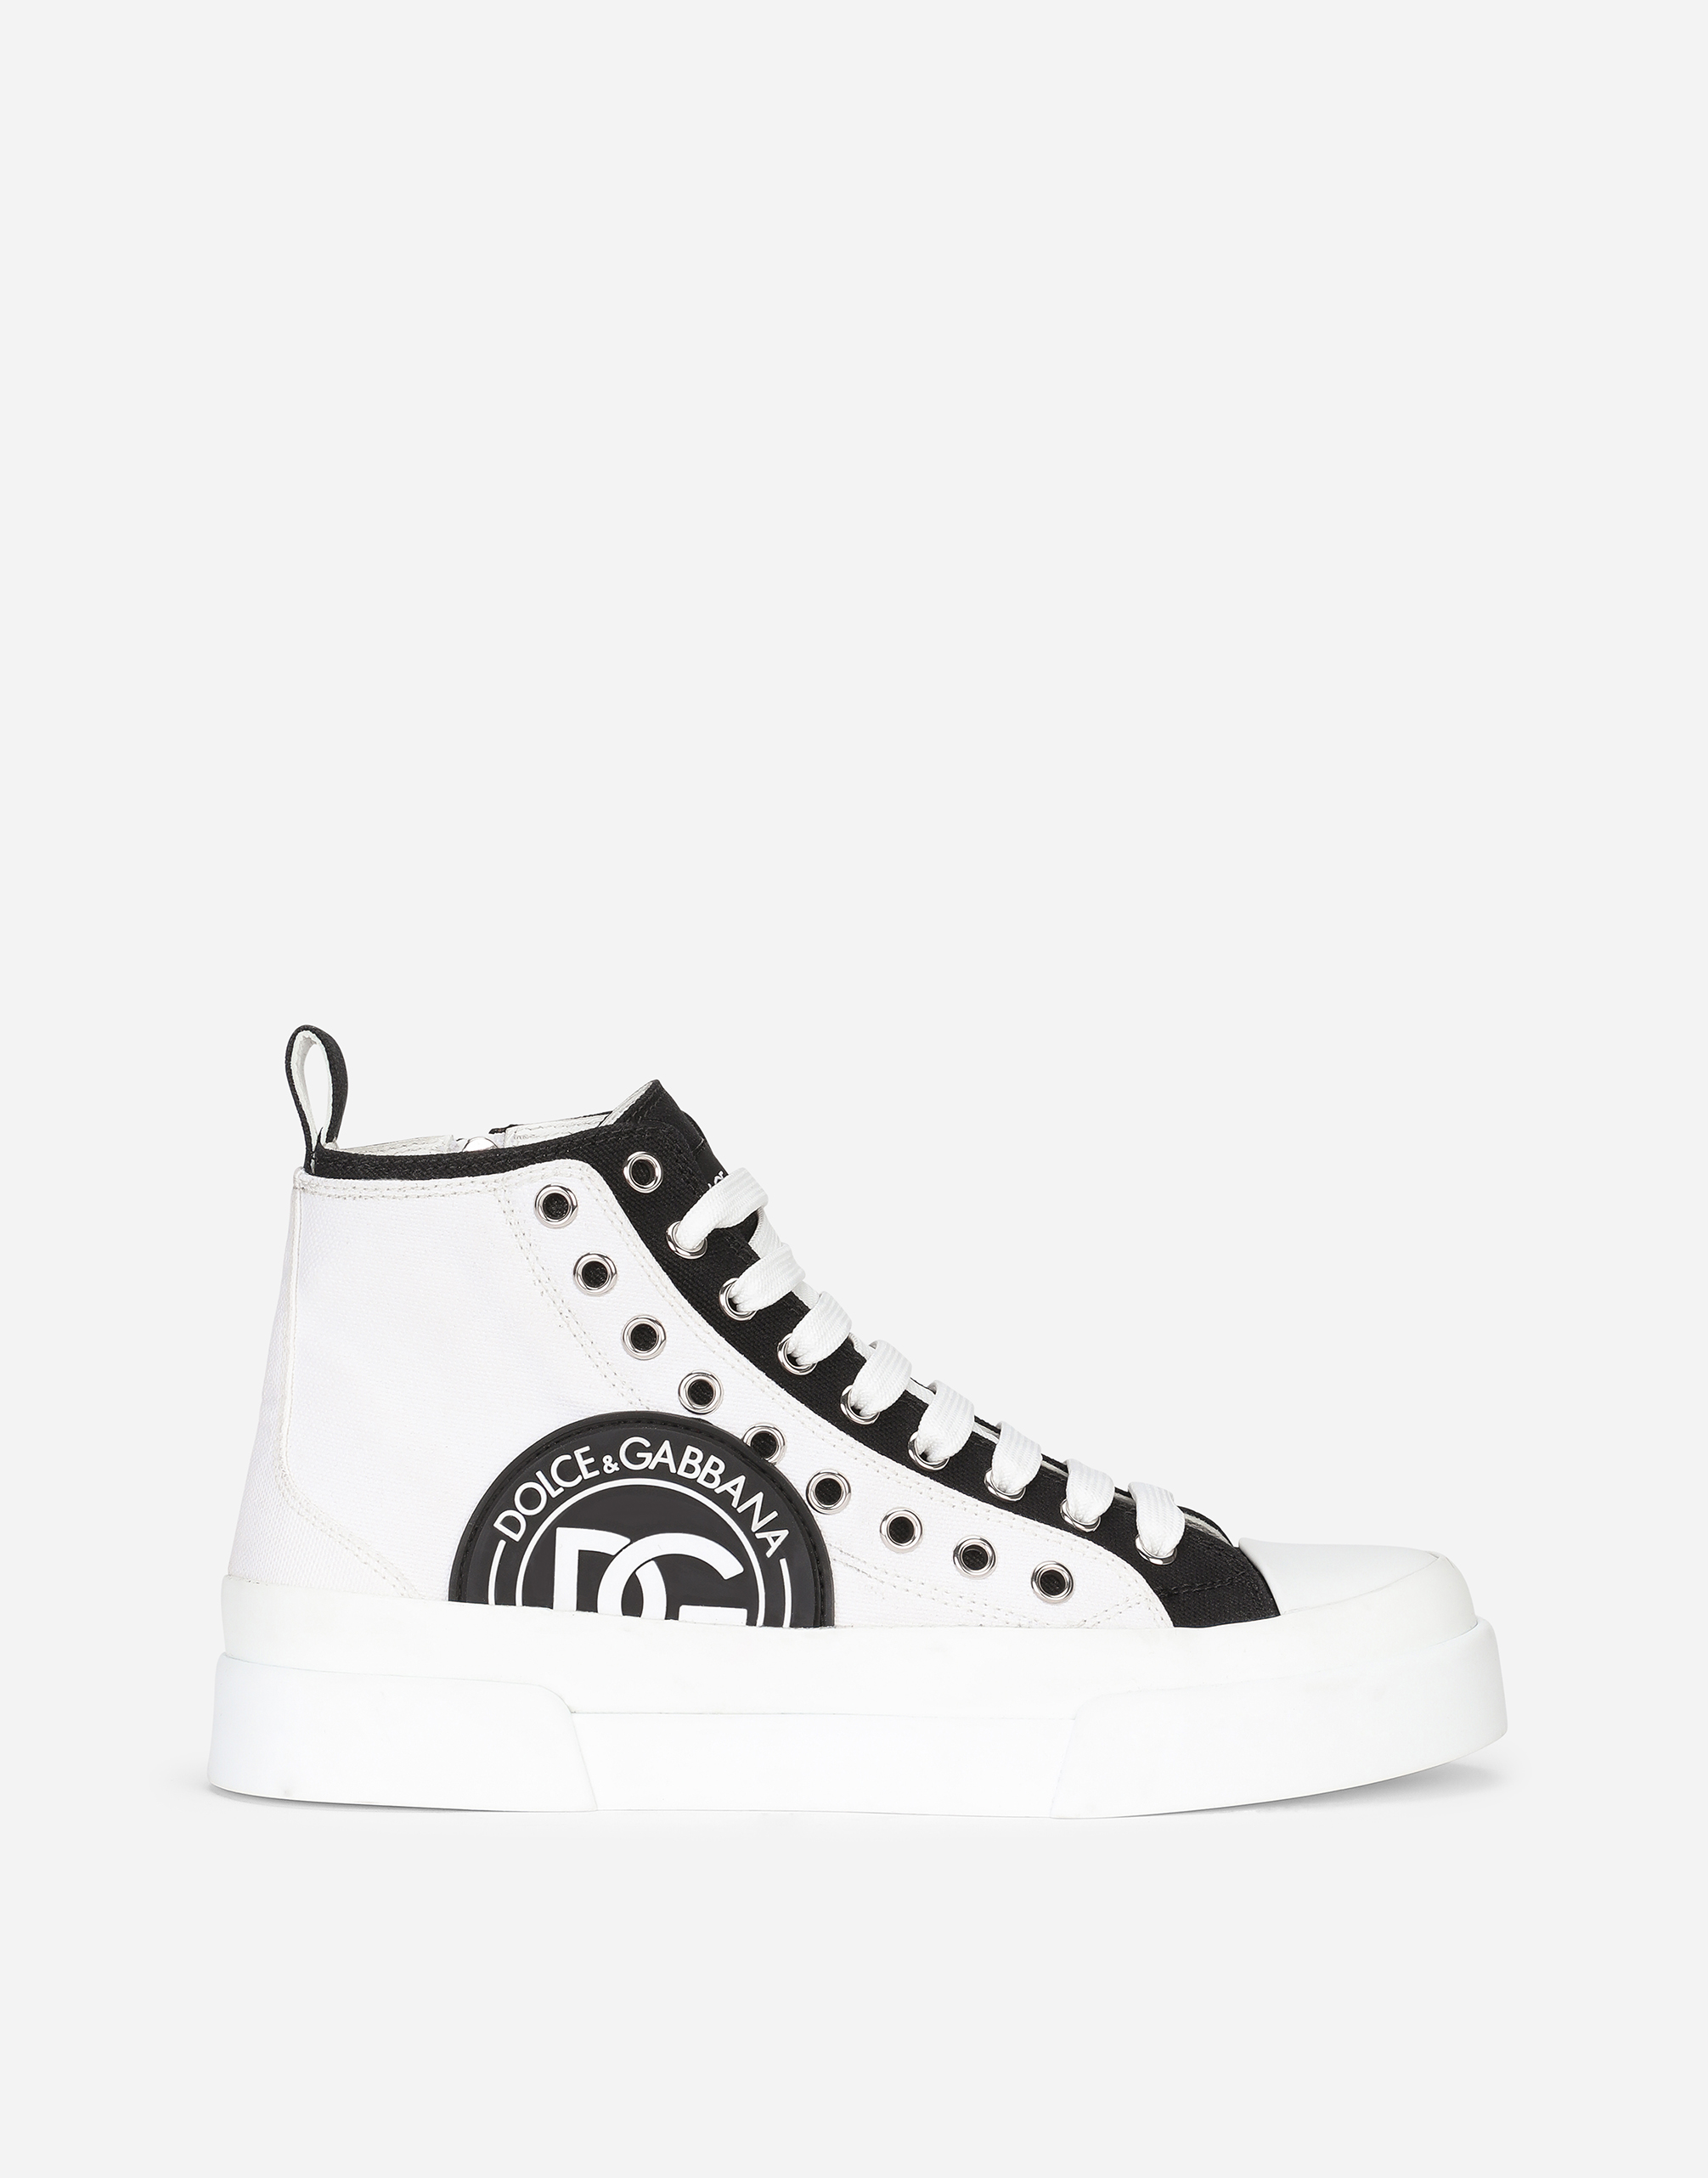 Two-tone canvas Portofino Light mid-top sneakers with DG logo in  White/Black for Women | Dolce&Gabbana®